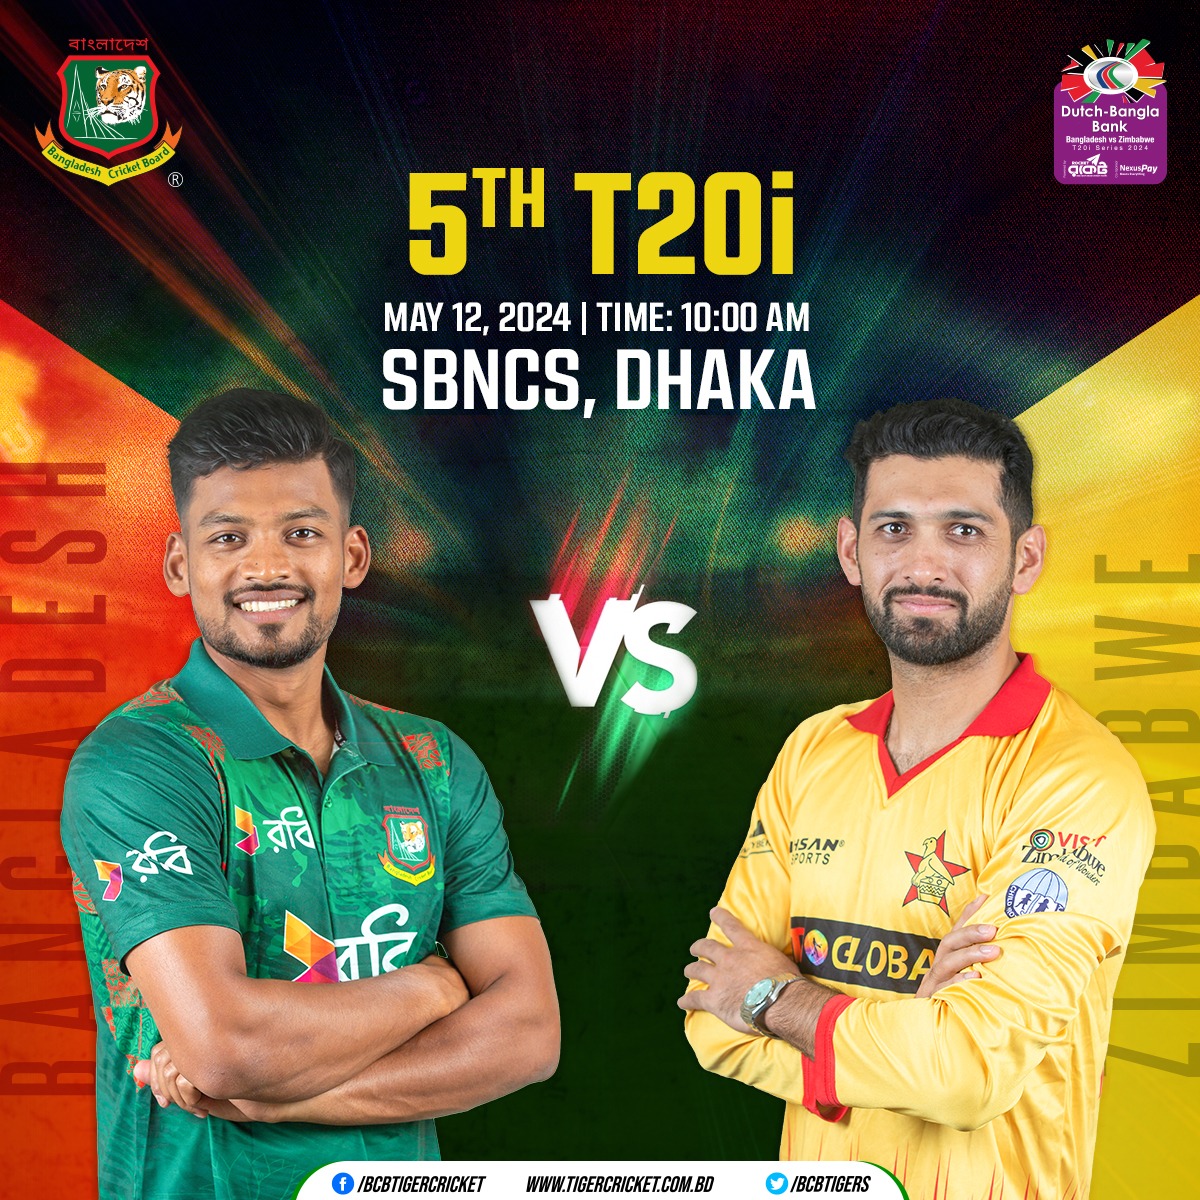 Dutch-Bangla Bank Bangladesh vs Zimbabwe T20i Series 2024🏏 5th T20i | May 12, 2024 | 10:00 am | SBNCS, Dhaka Details👉: tigercricket.com.bd/live-score/zim… #BANvZIM #BCB #Cricket #BDCricket #livecricket #Bangladesh